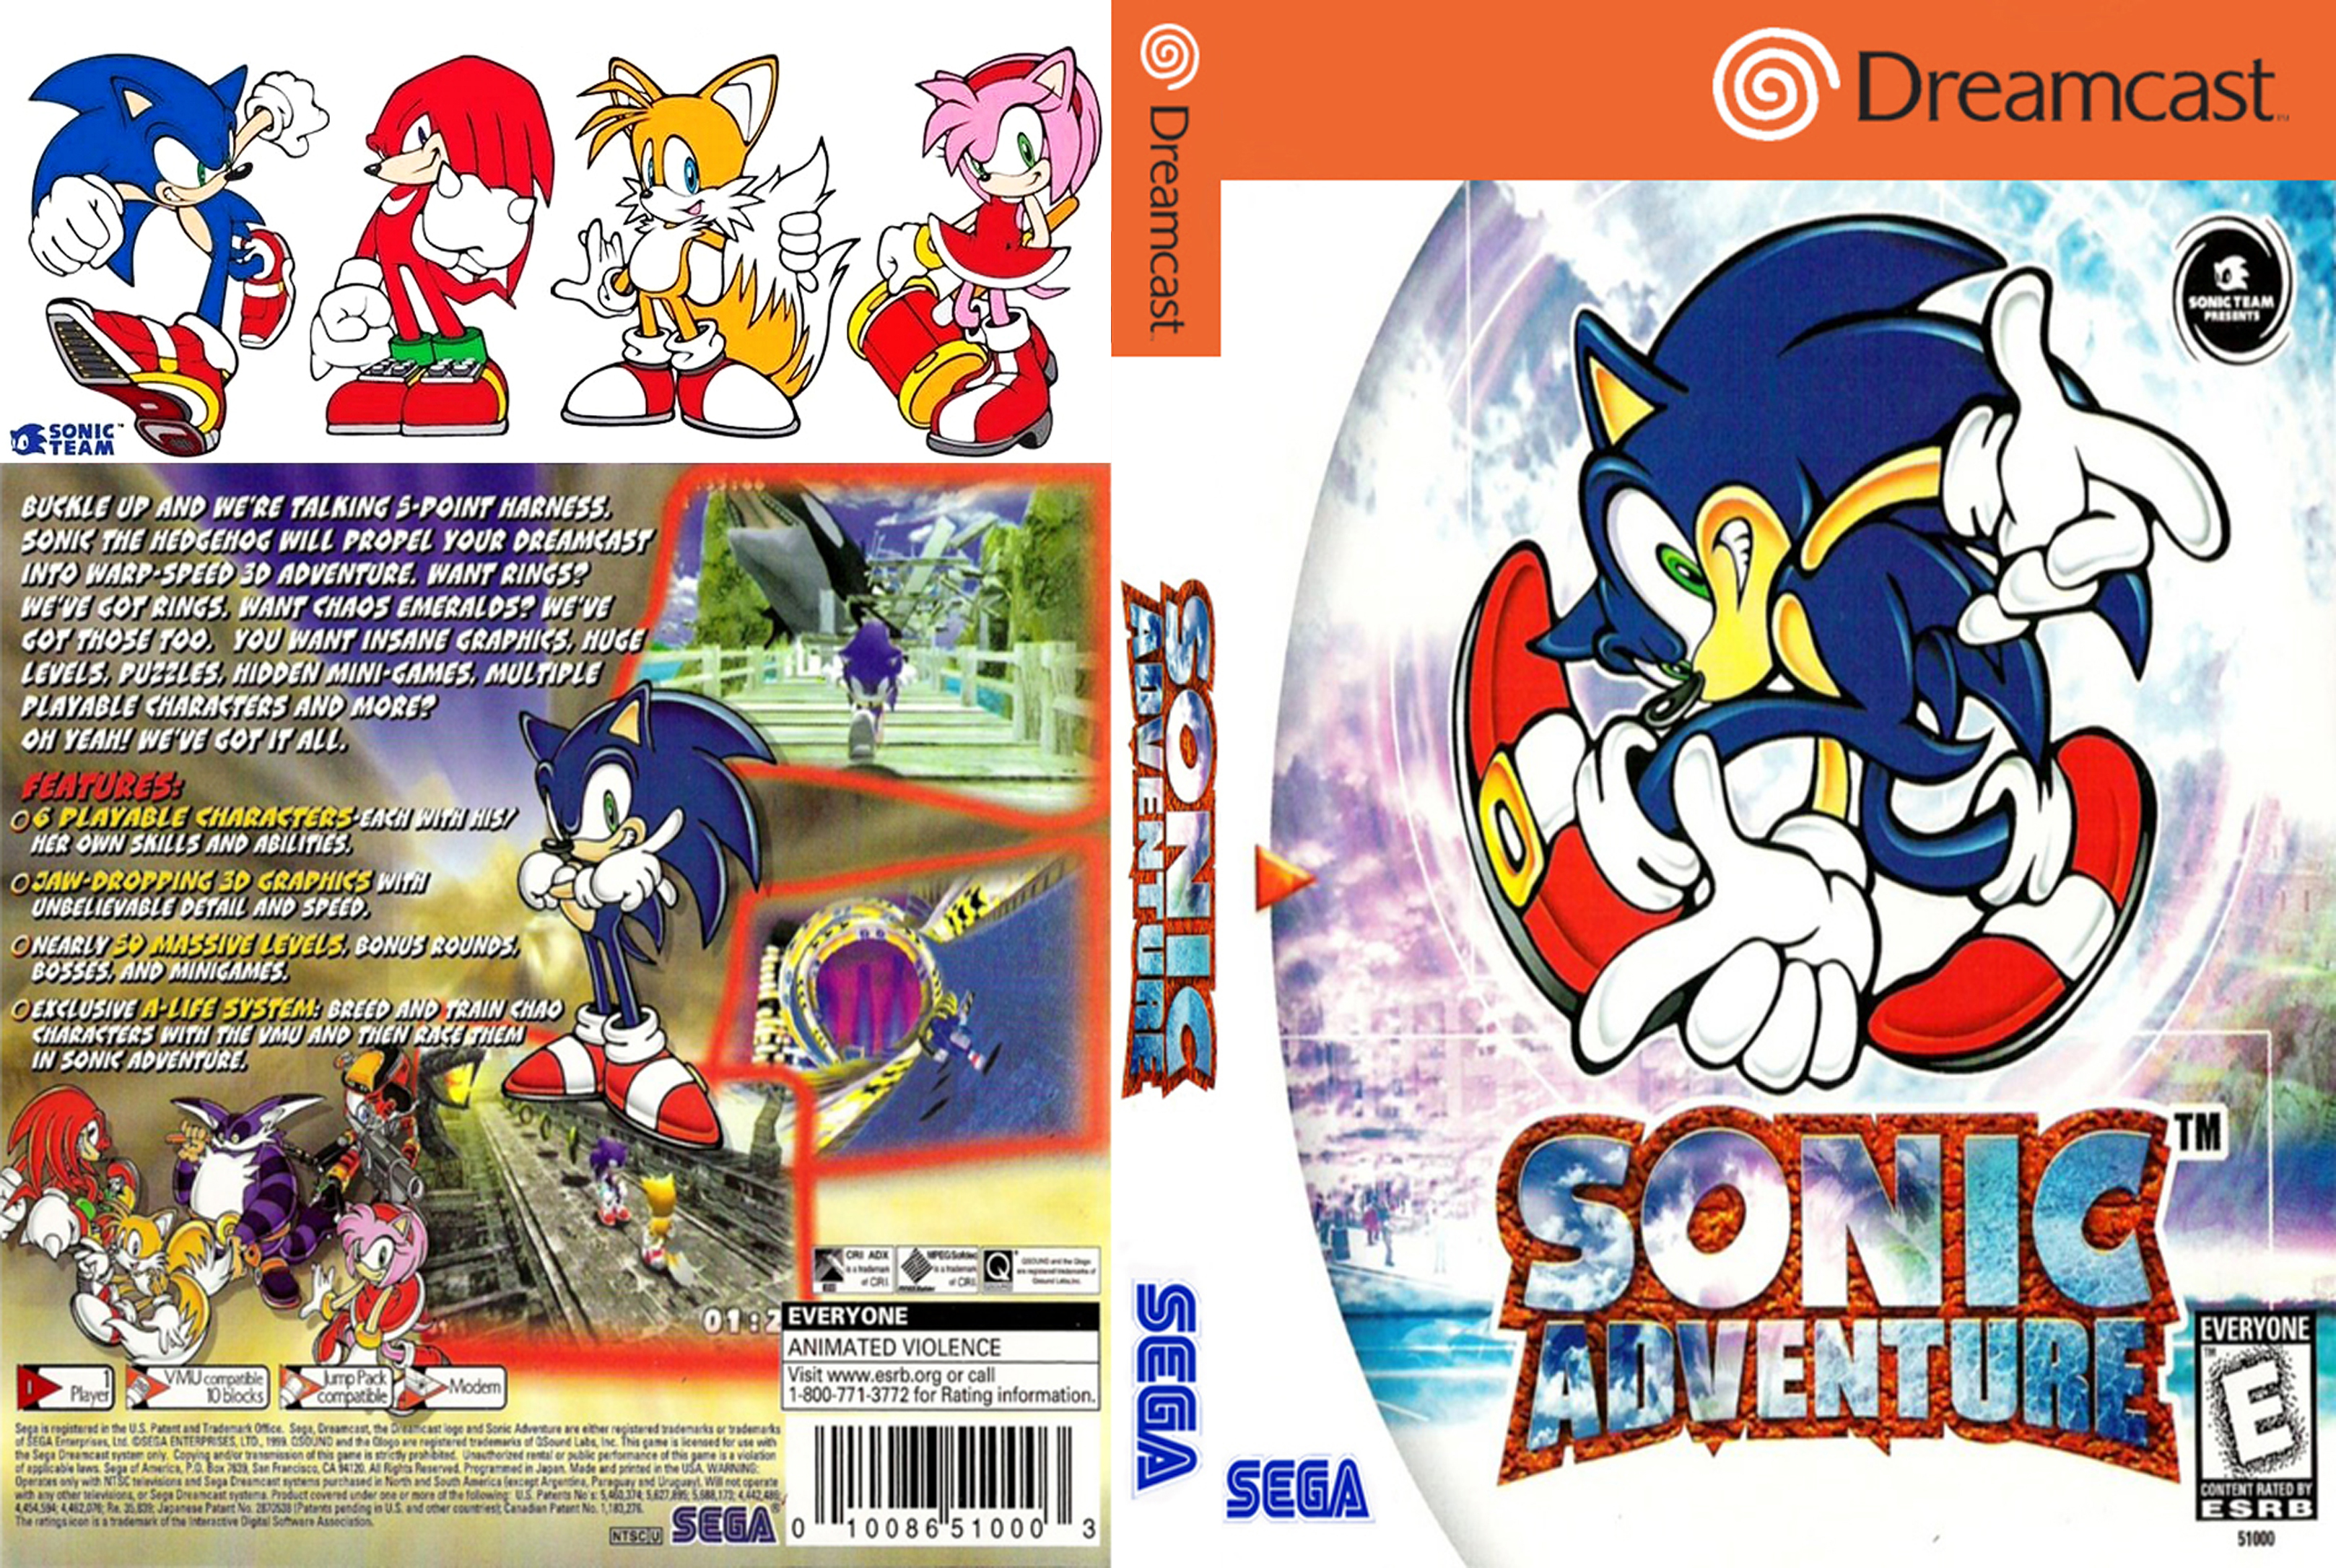 Sonic на dreamcast русский. Sonic Adventure 2 Dreamcast обложка. Sonic Adventure 2 диск. Sonic Adventure Dreamcast обложка. Sonic Adventure 2 обложка Дримкаст.